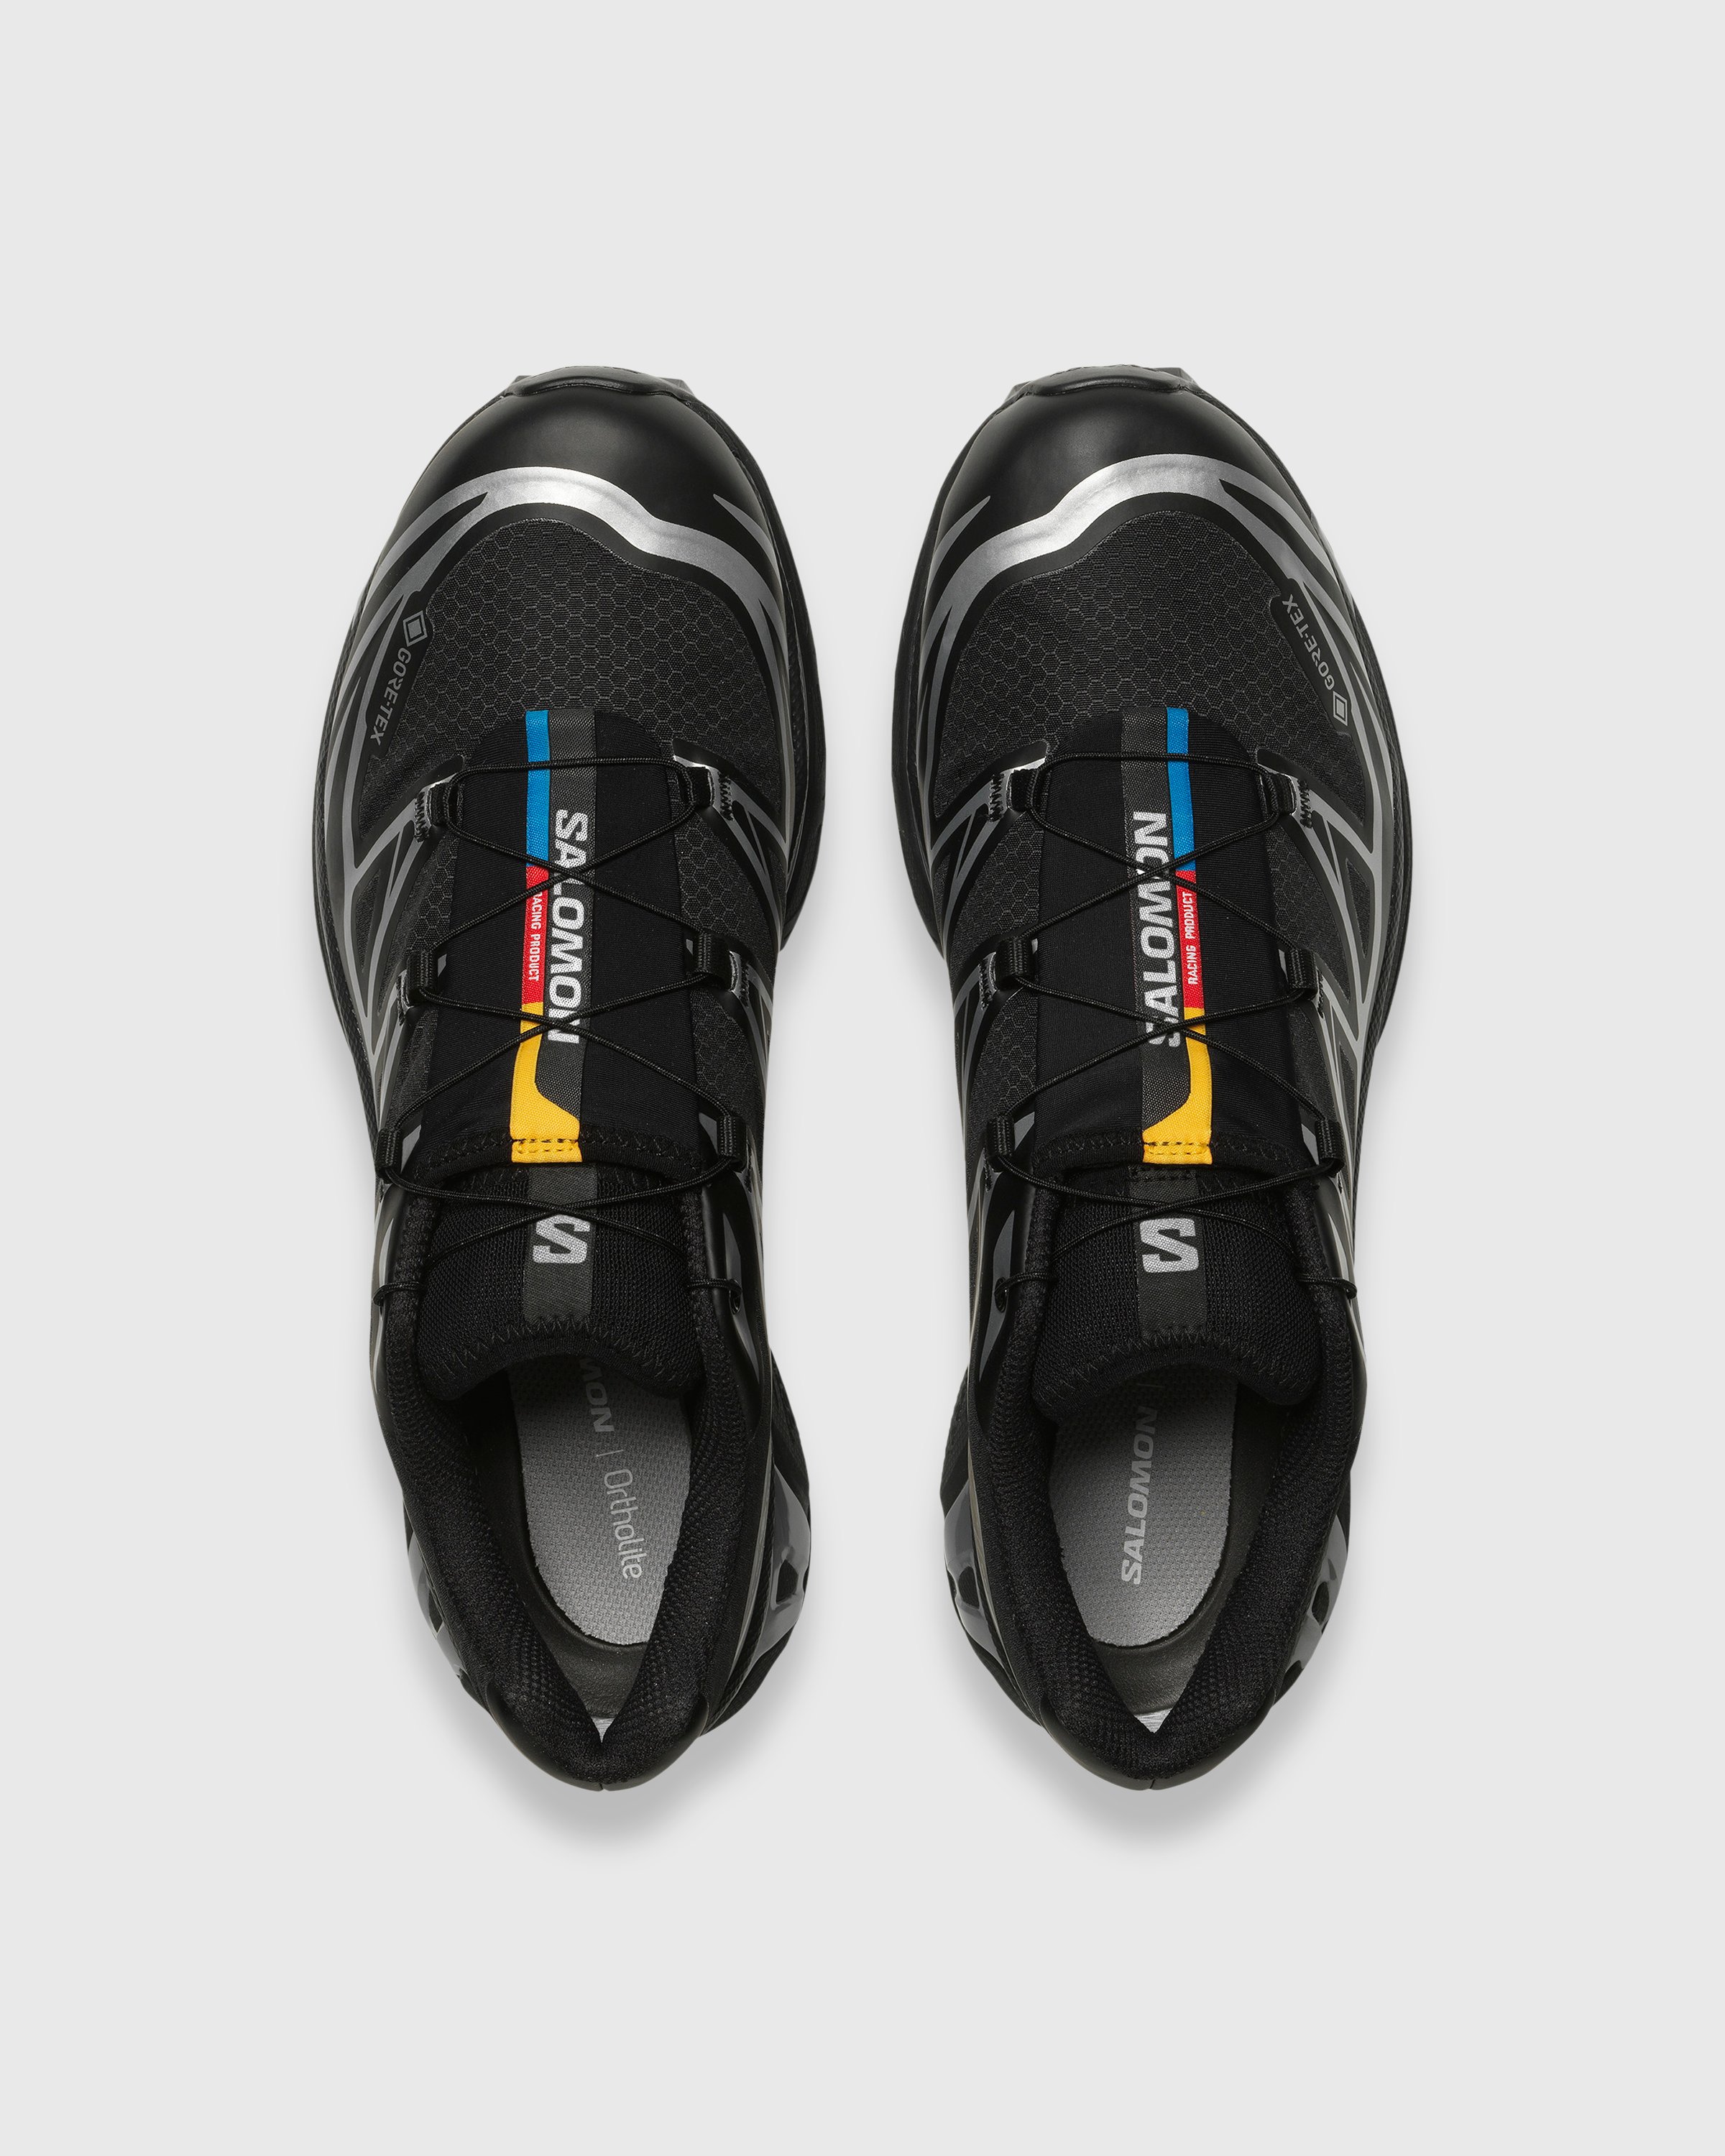 Salomon - XT-6 GTX Black/Black/Ftw Silver - Footwear - Black - Image 4